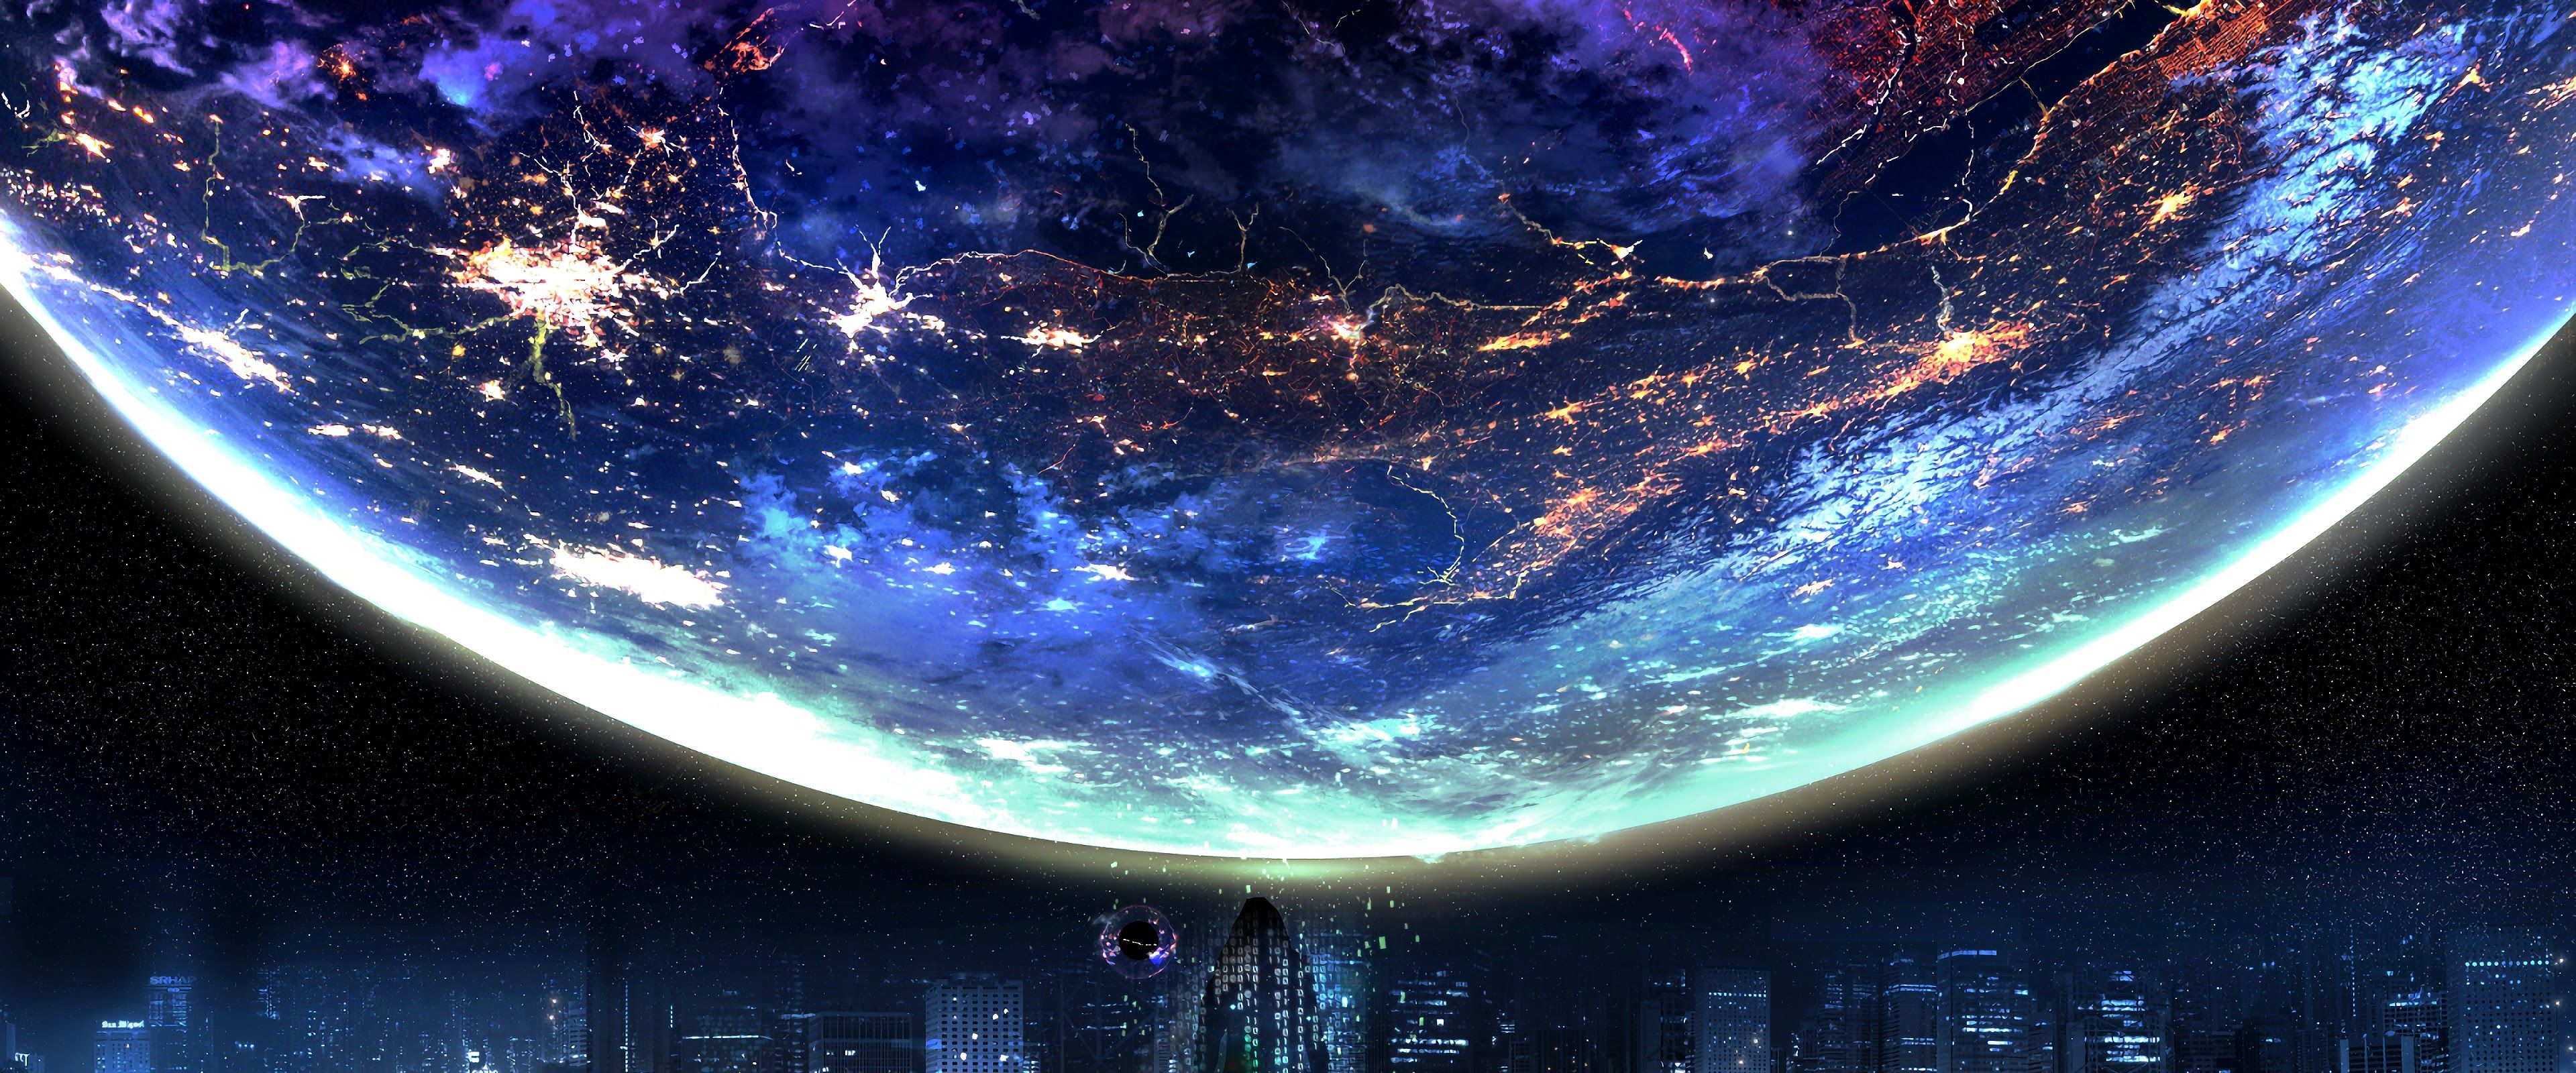 Planet Night City Landscape Scenery Anime 4K Wallpaper